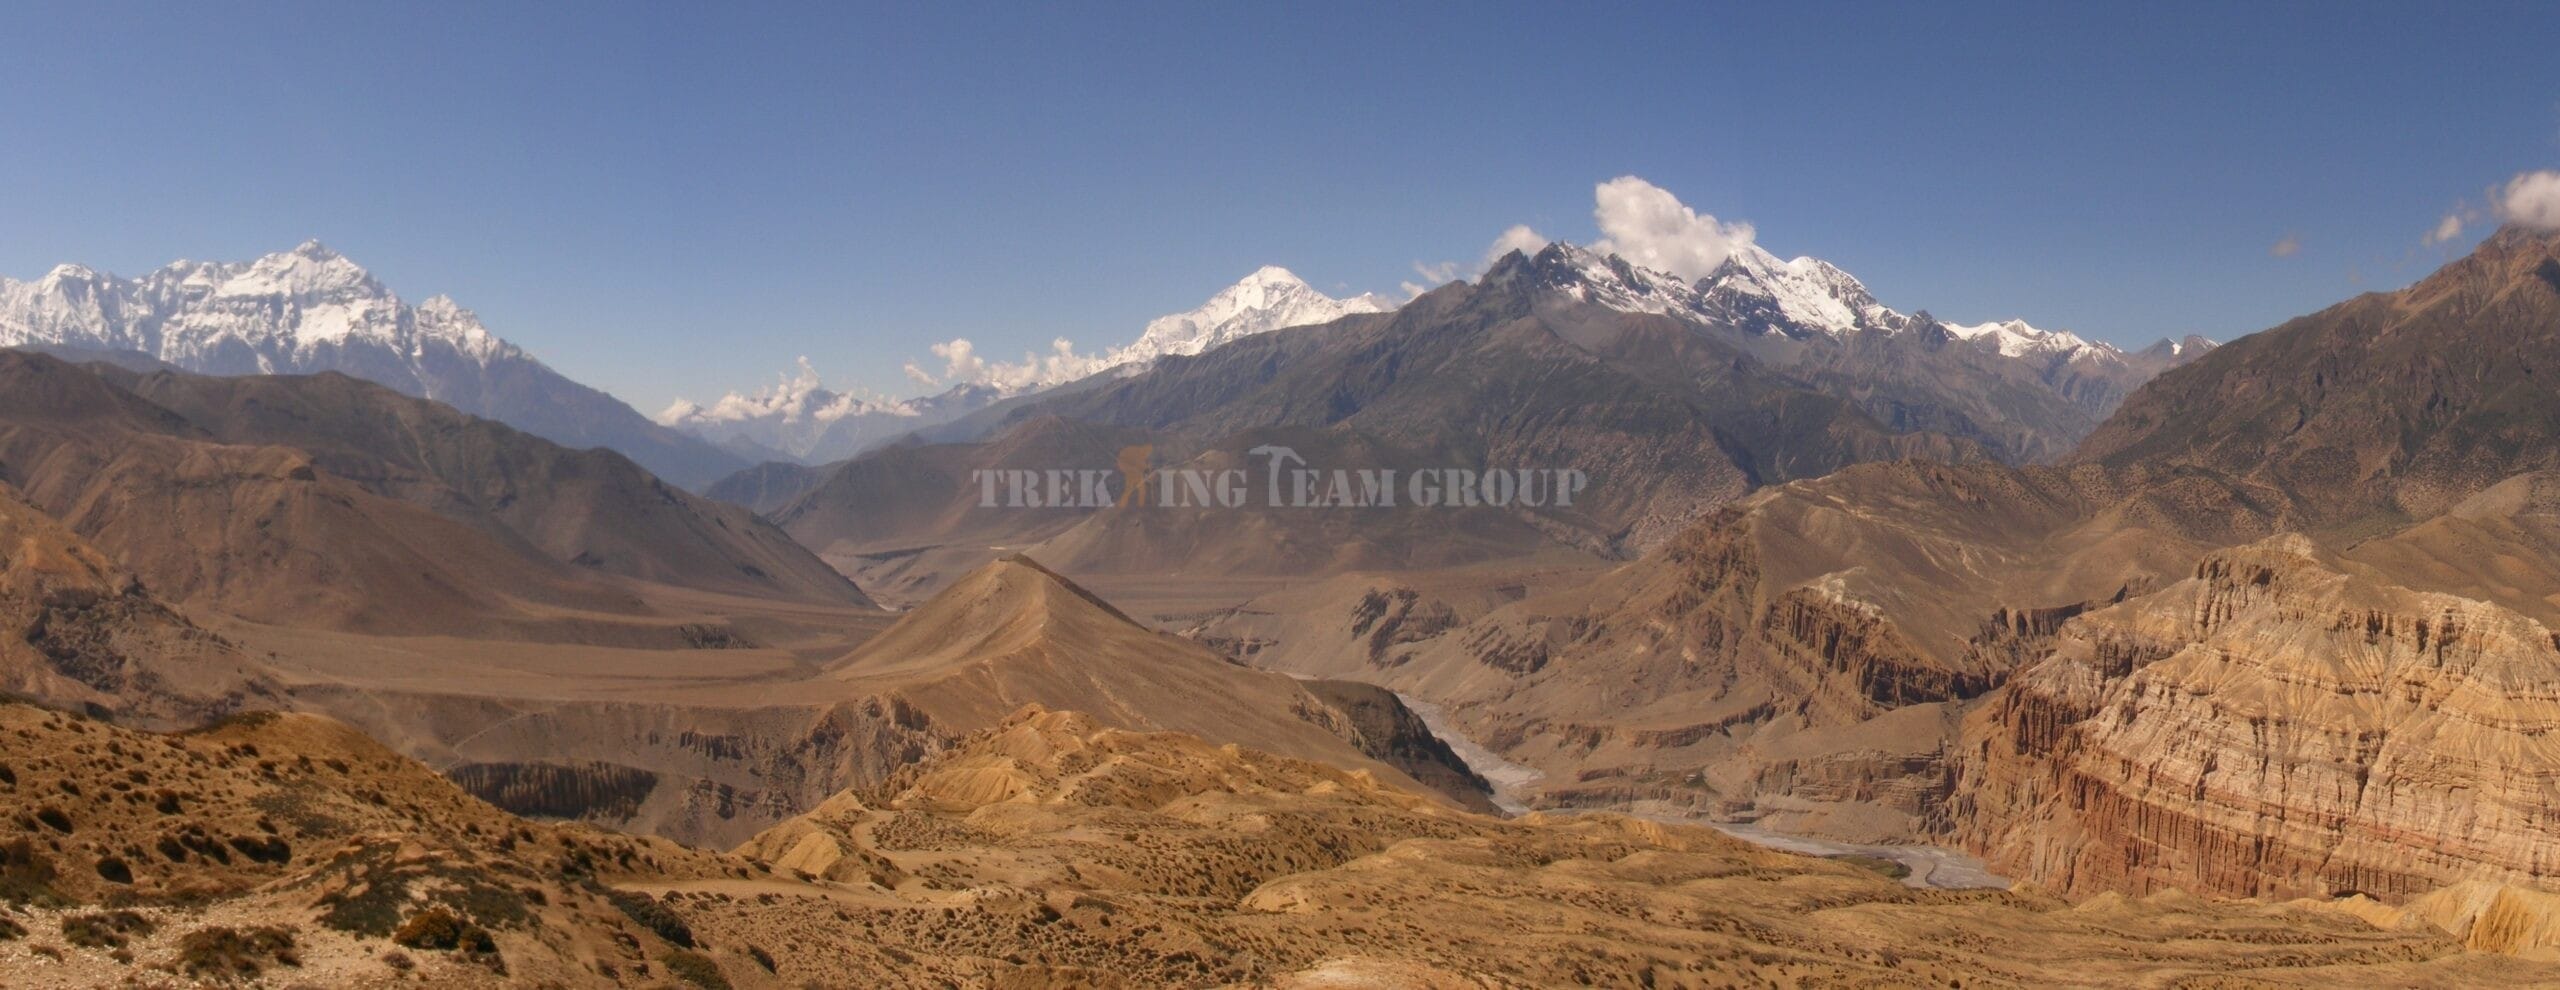 Trekking Team Group Banner